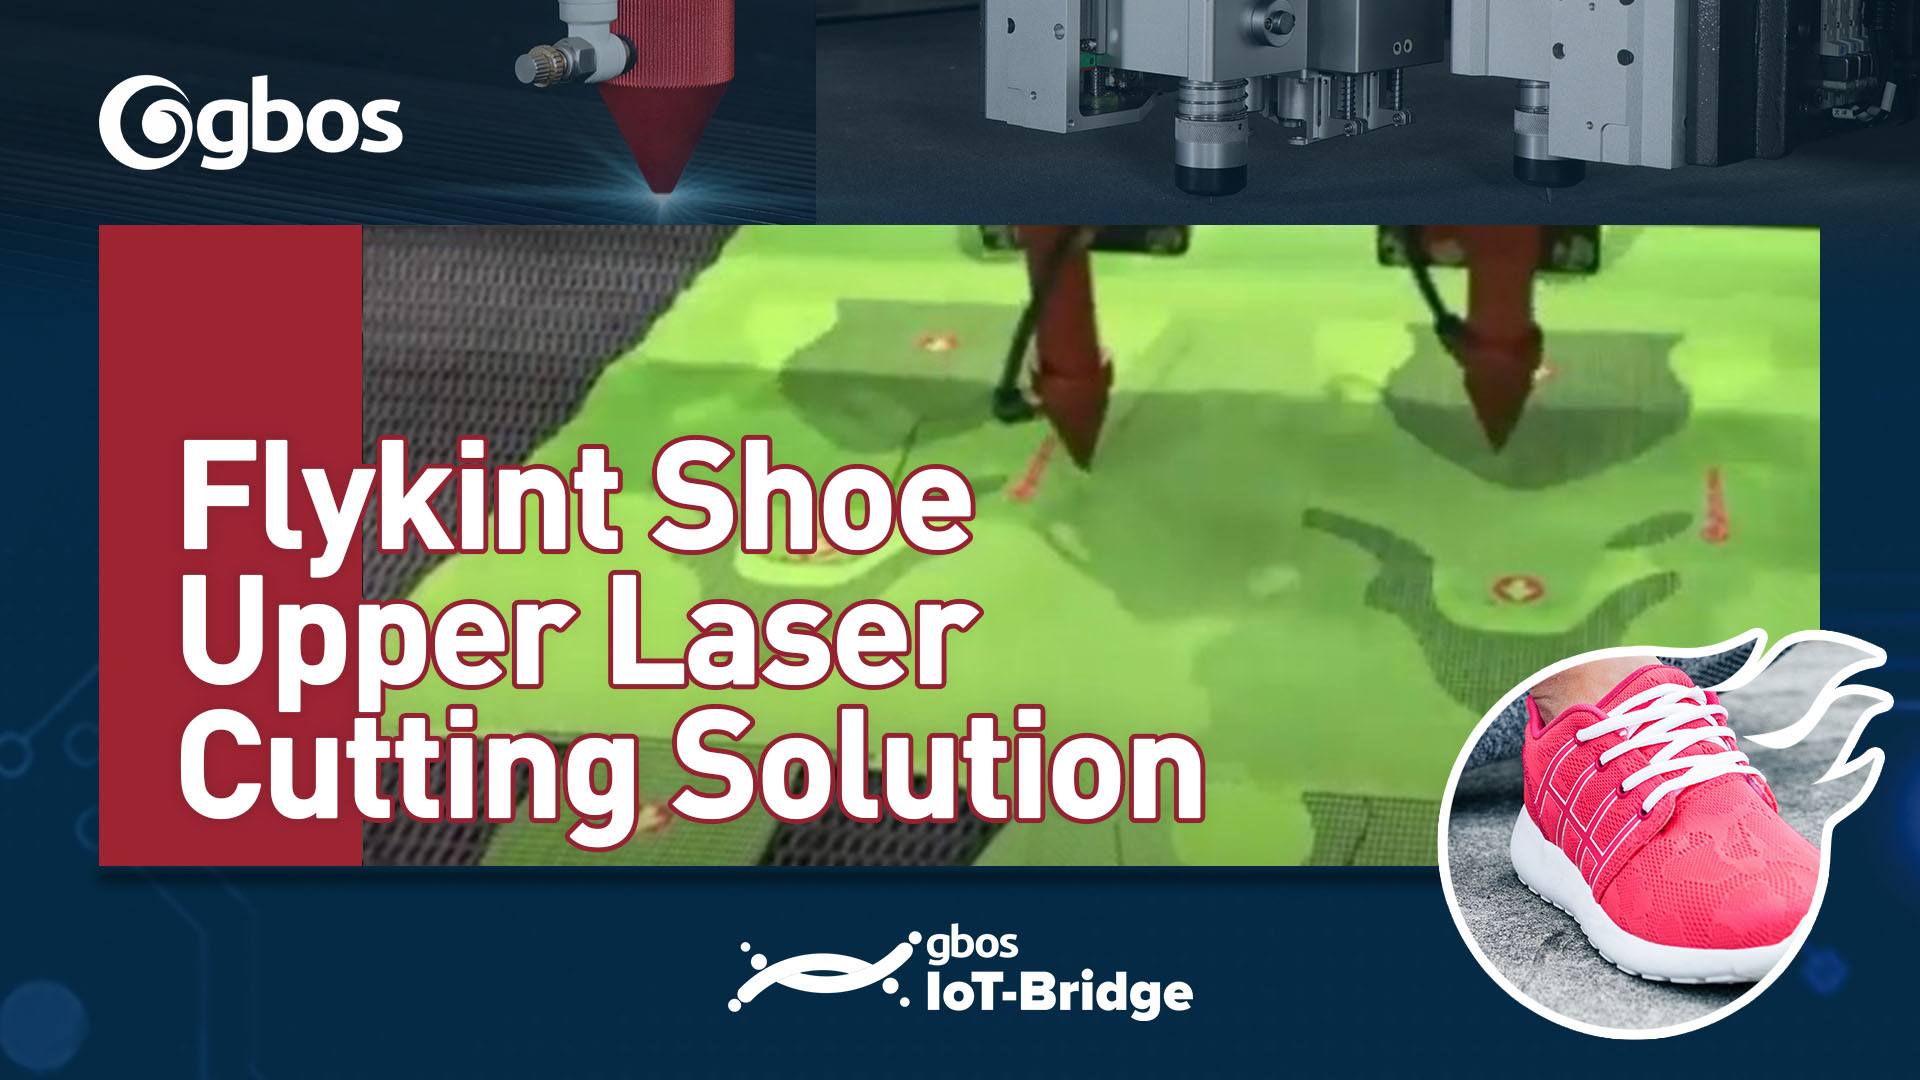 Flykint Shoe Upper Laser Cutting Solution